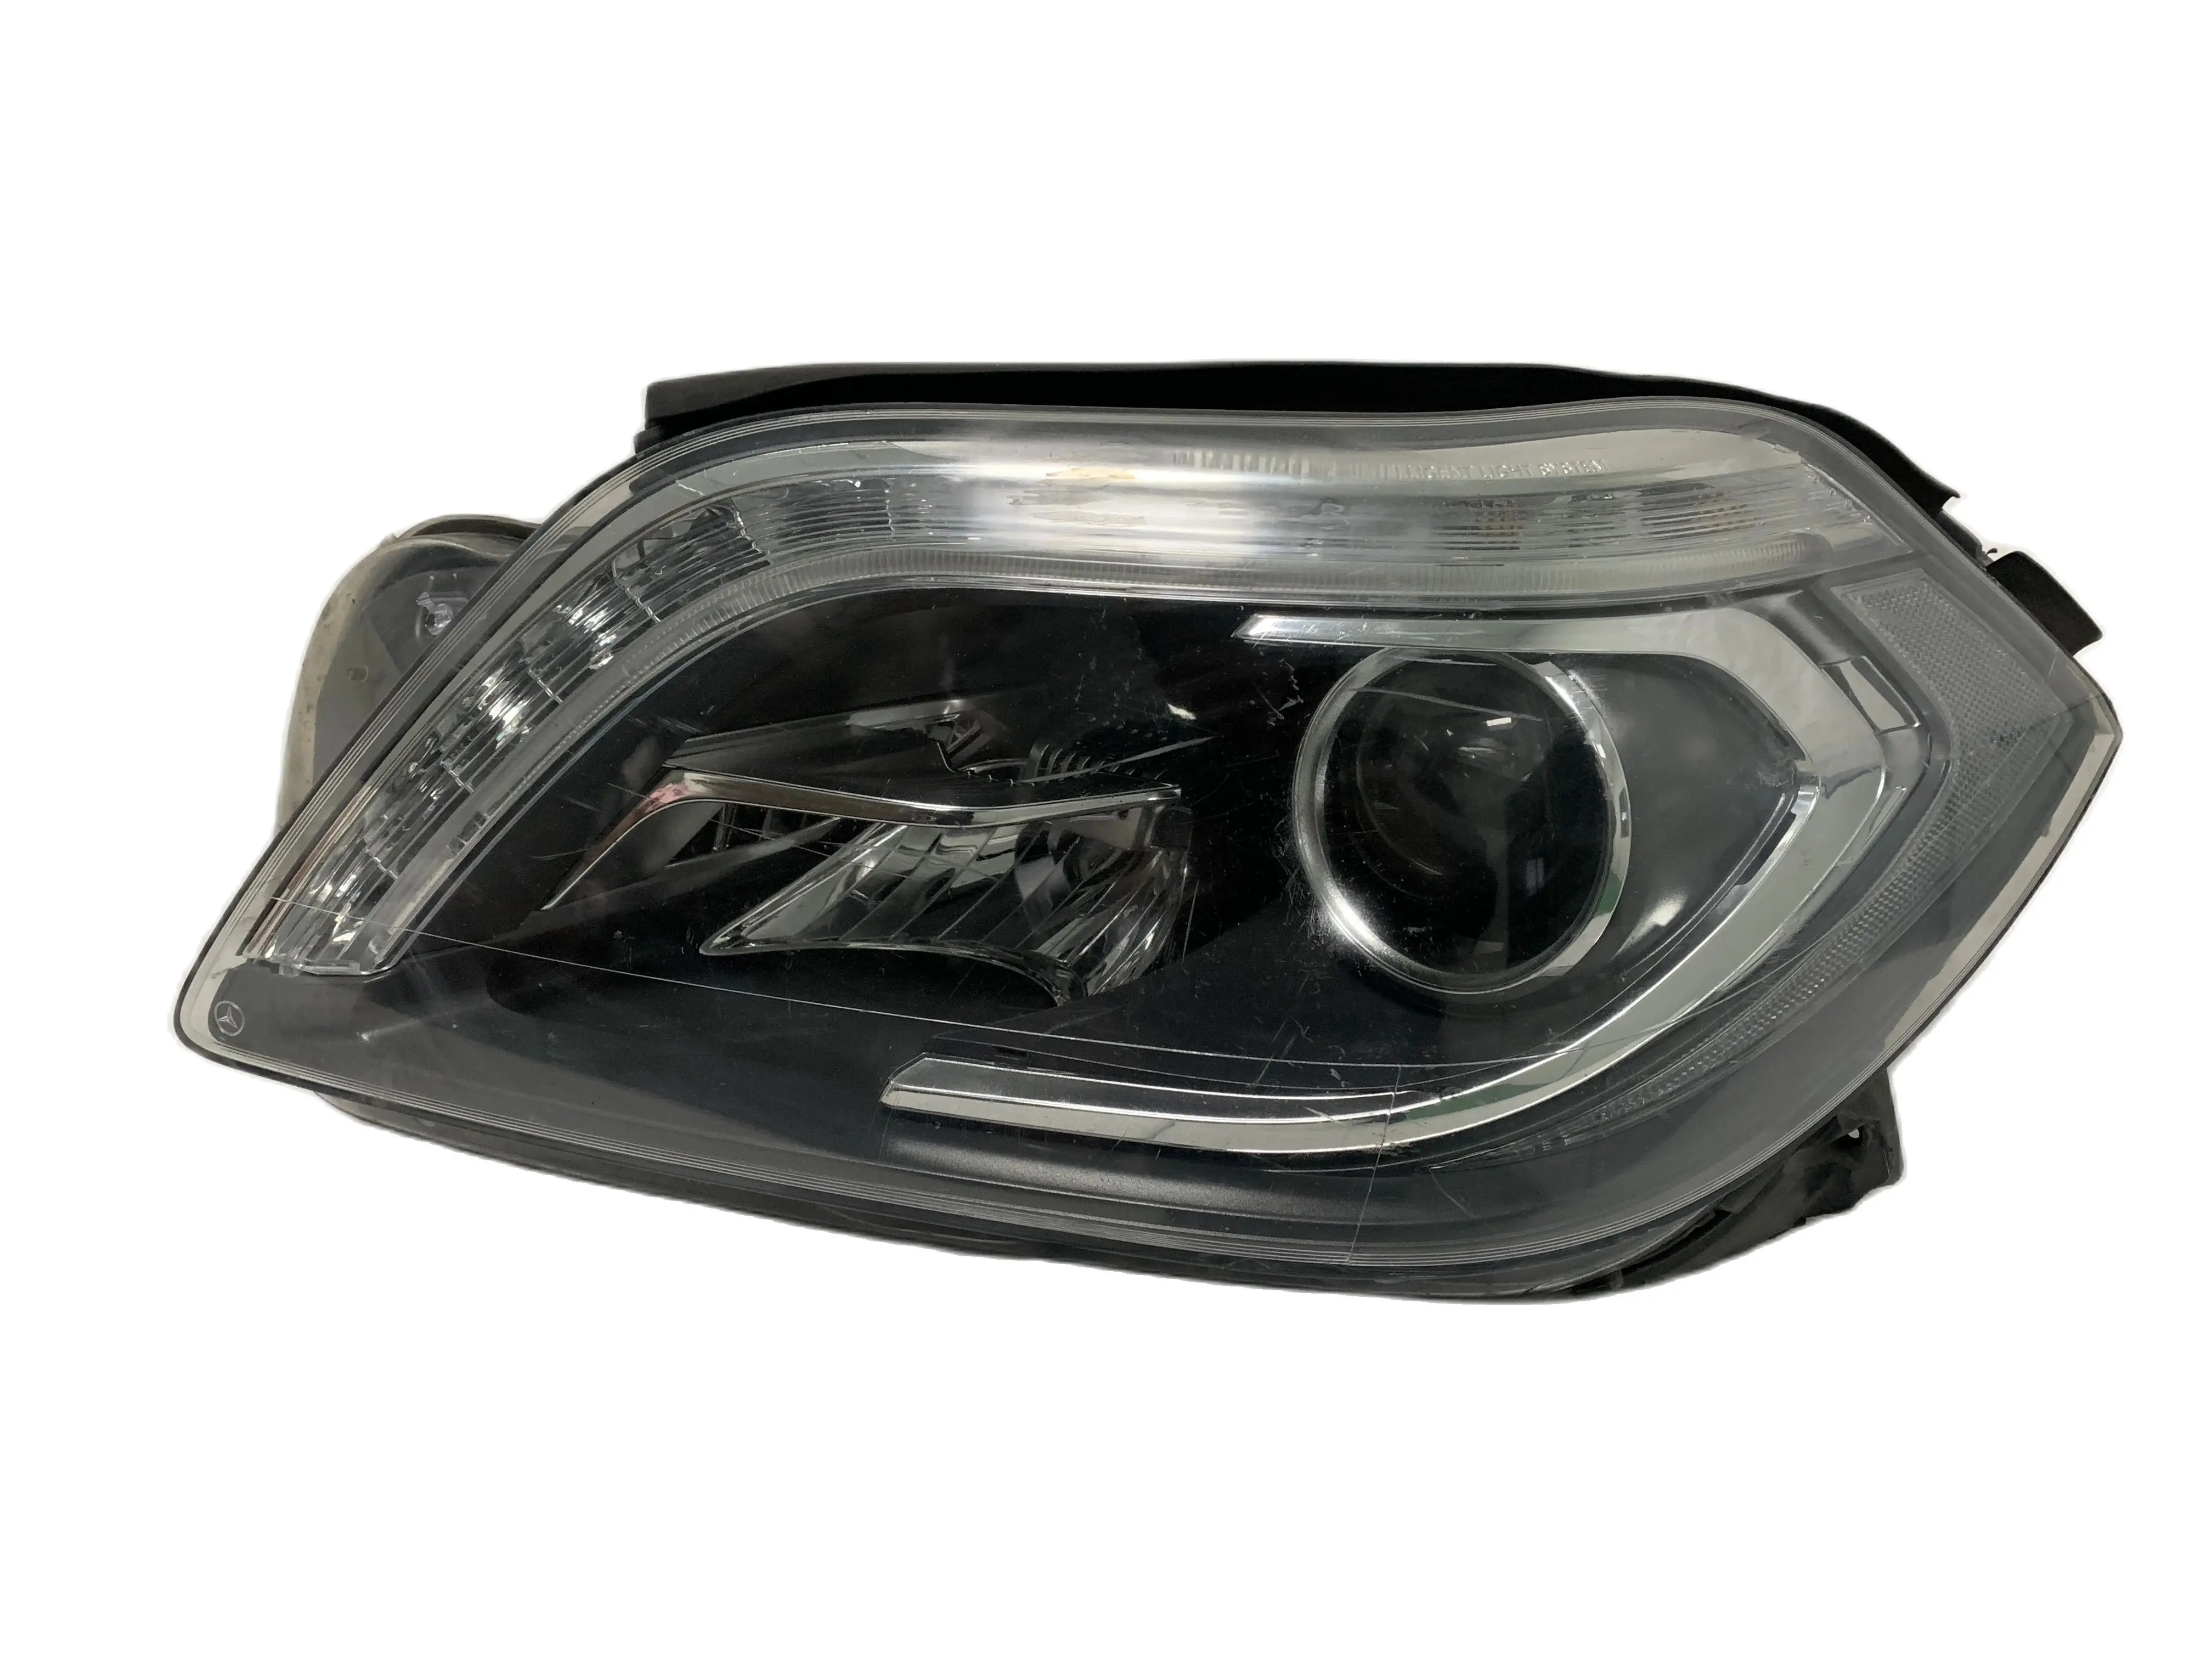 

Car Headlight Assembly, Suitable for Mercedes-Benz GL-Class, W166, X166, GL320 GL350 GL450 GL550 GL500 GL63 AMG Car Accessories